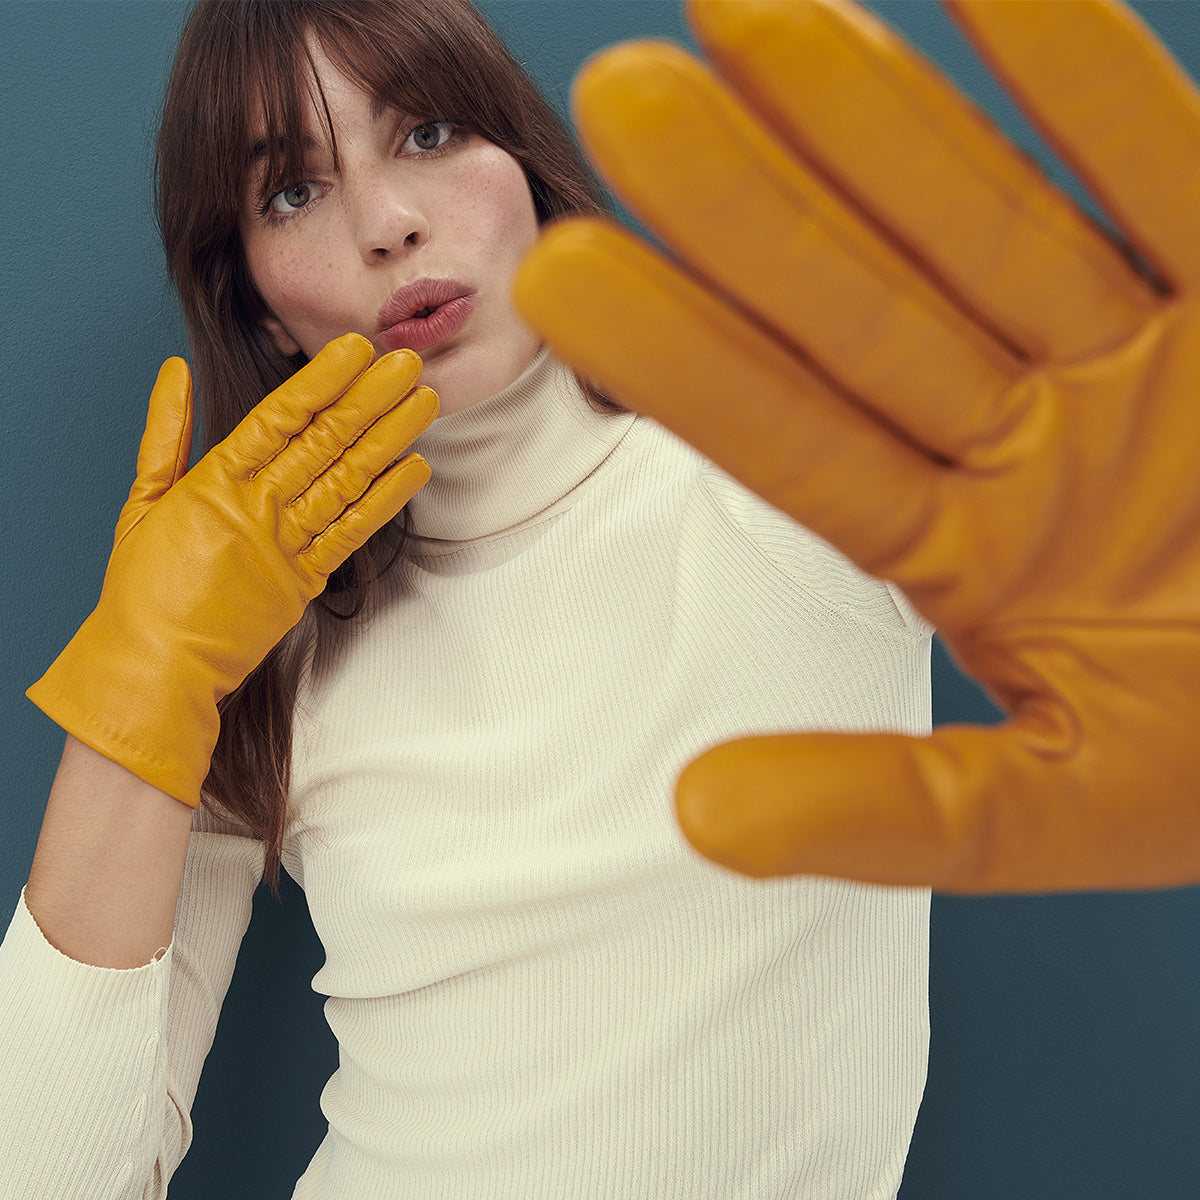 Women's leather gloves - Mustard yellow